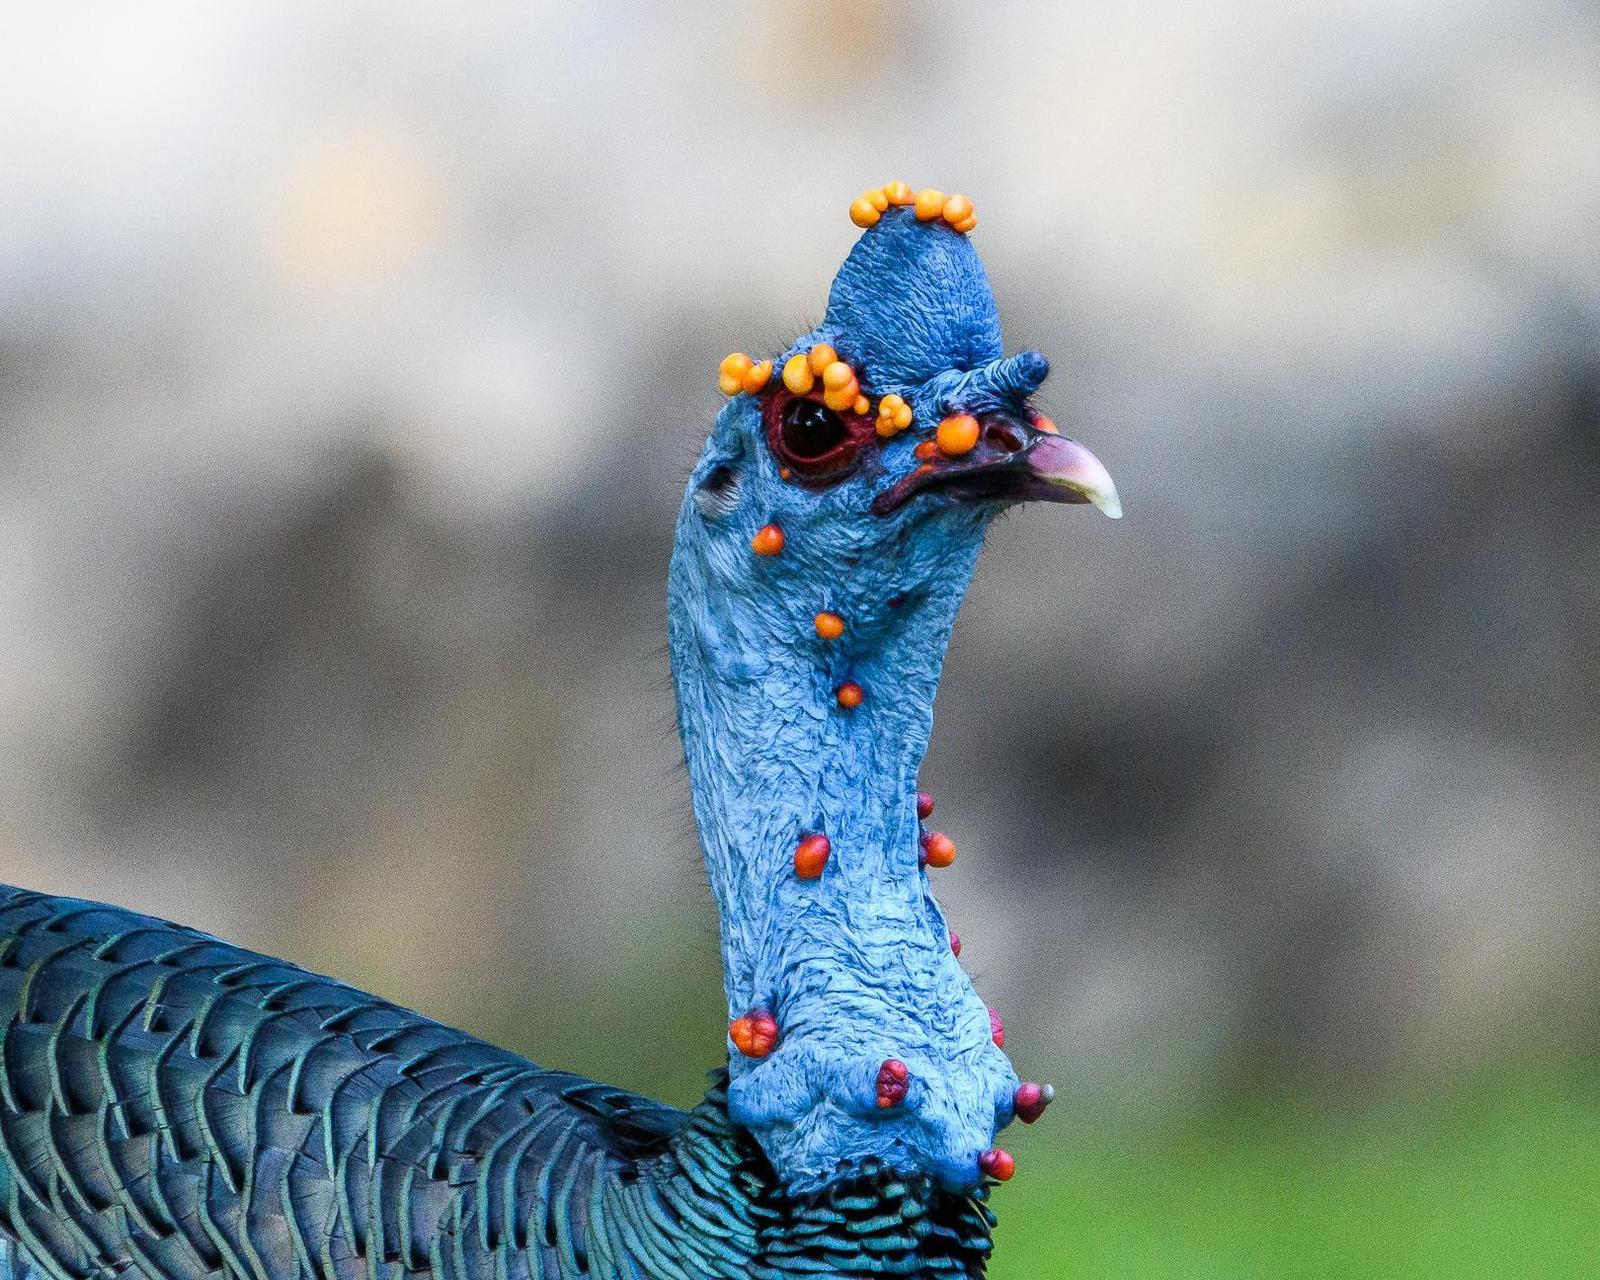 Ocellated Turkey Photo by Gerald Hoekstra